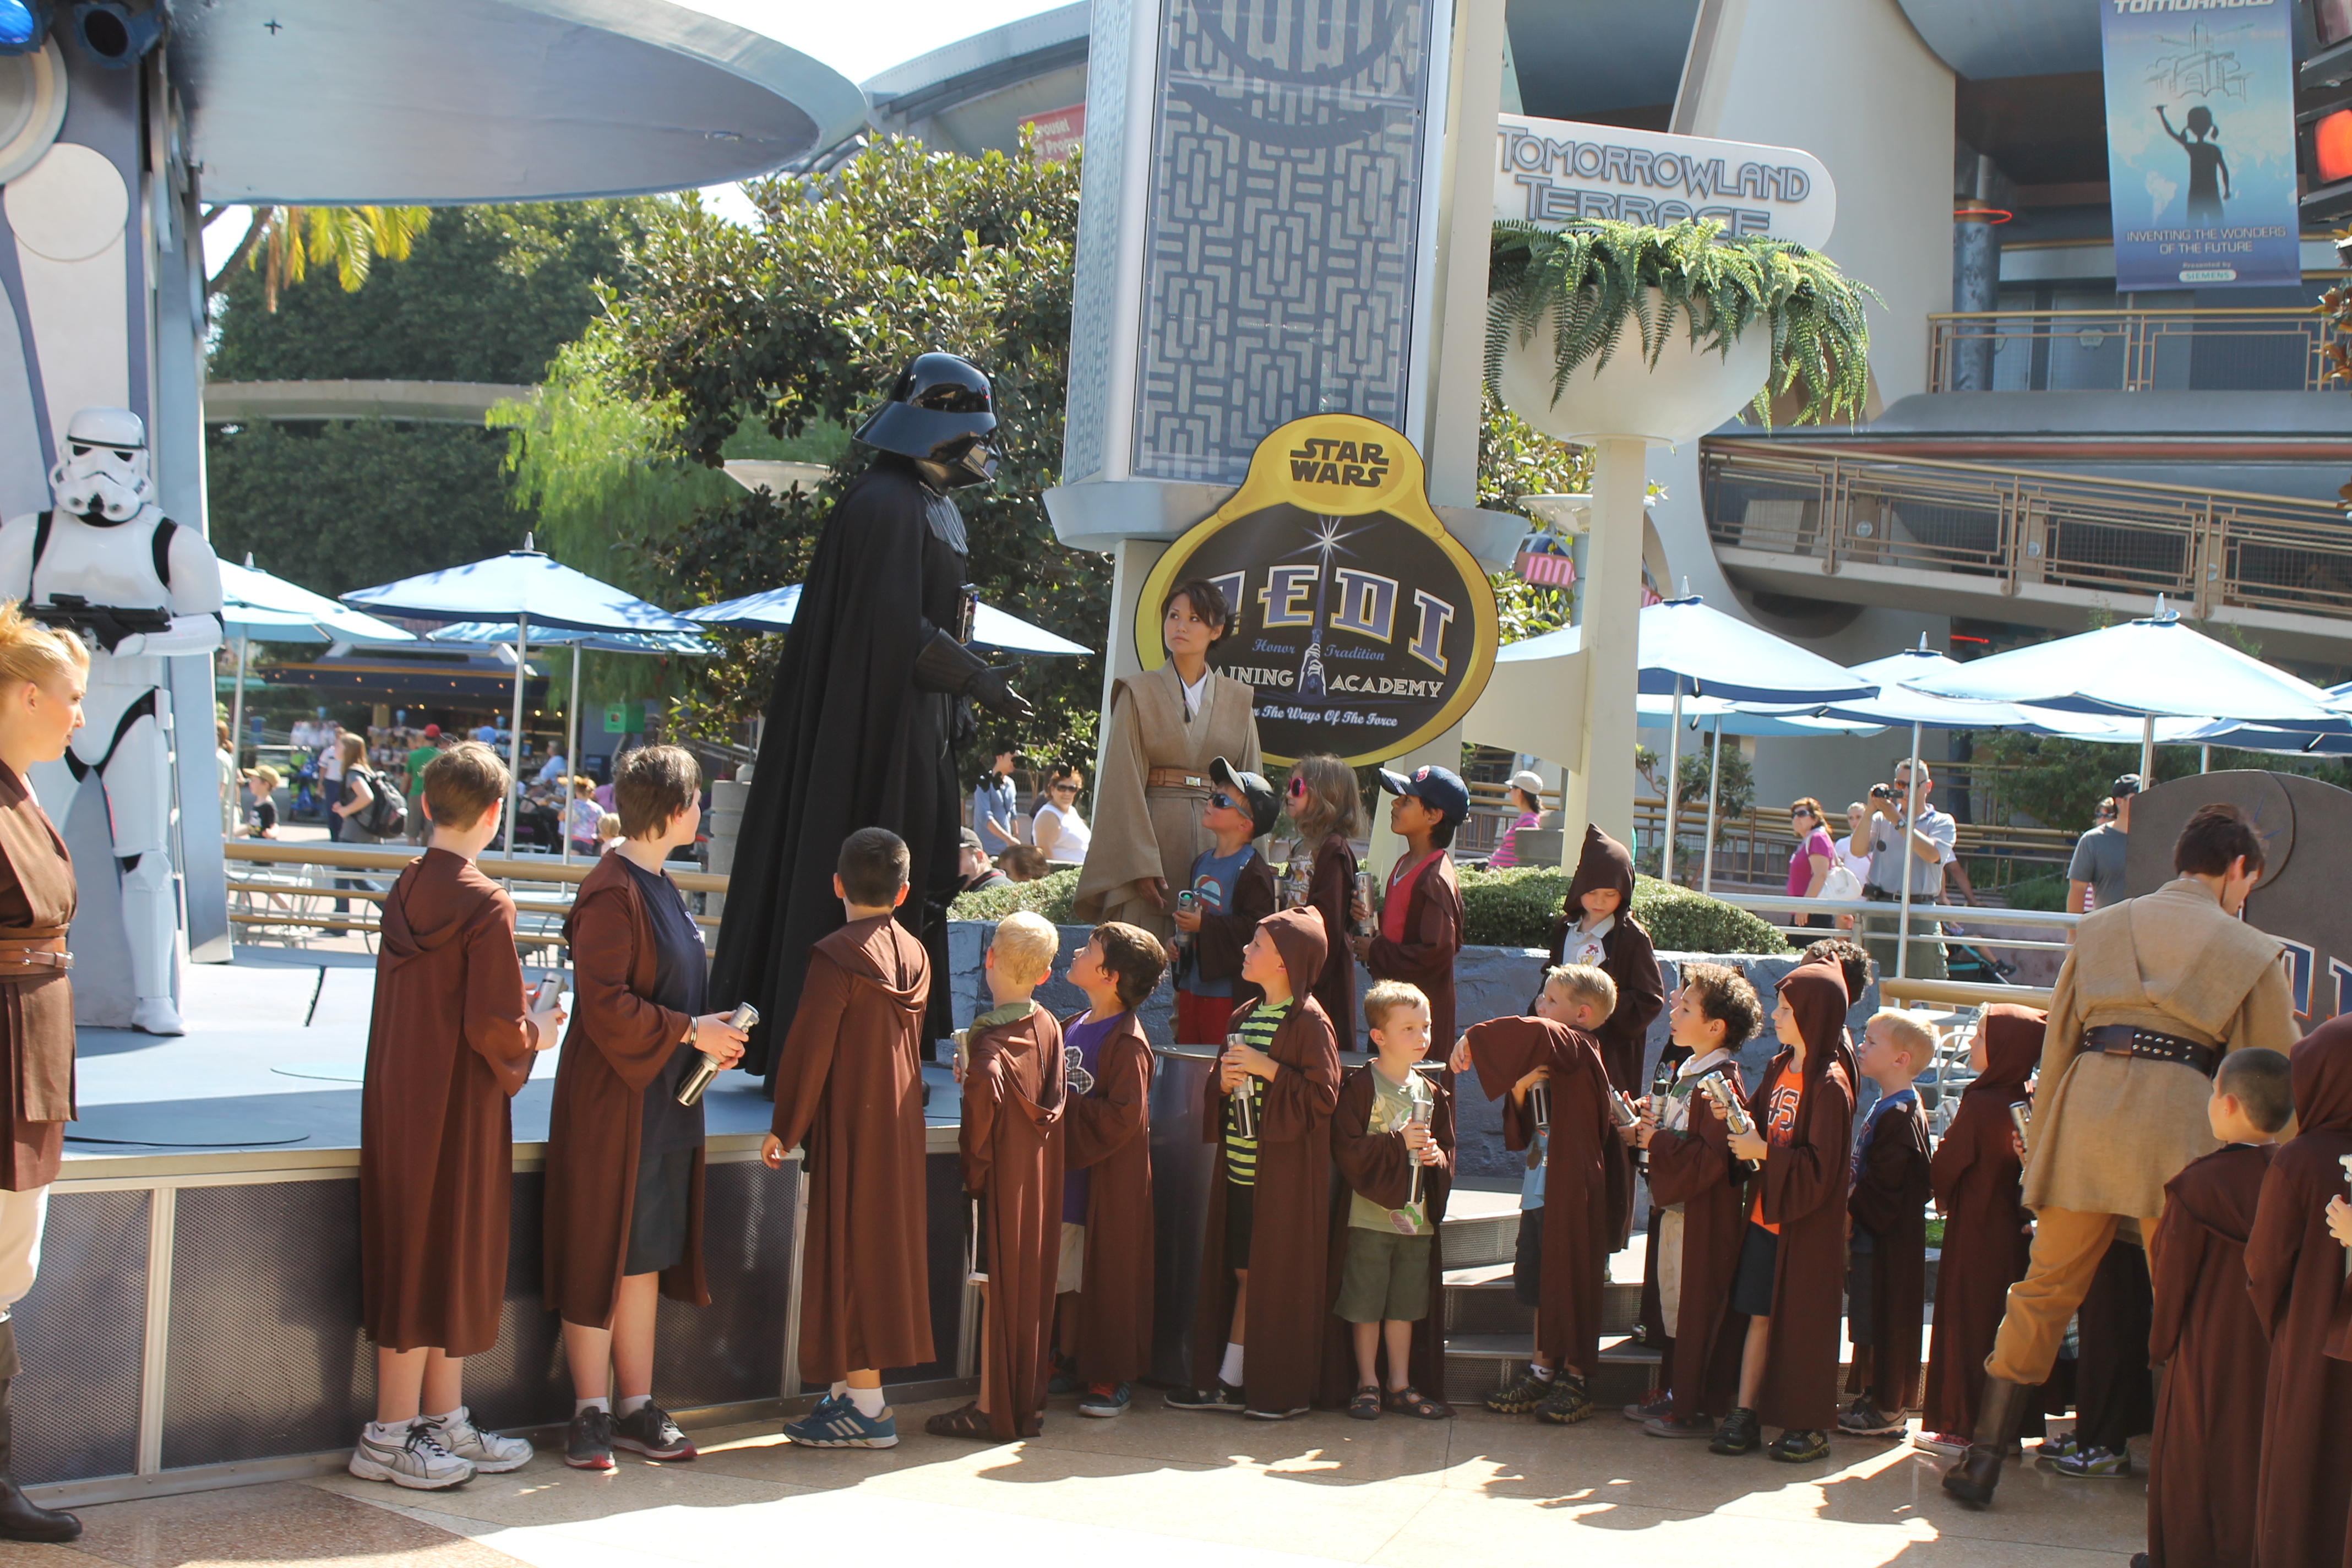 Jedi Training Academy at Disneyland